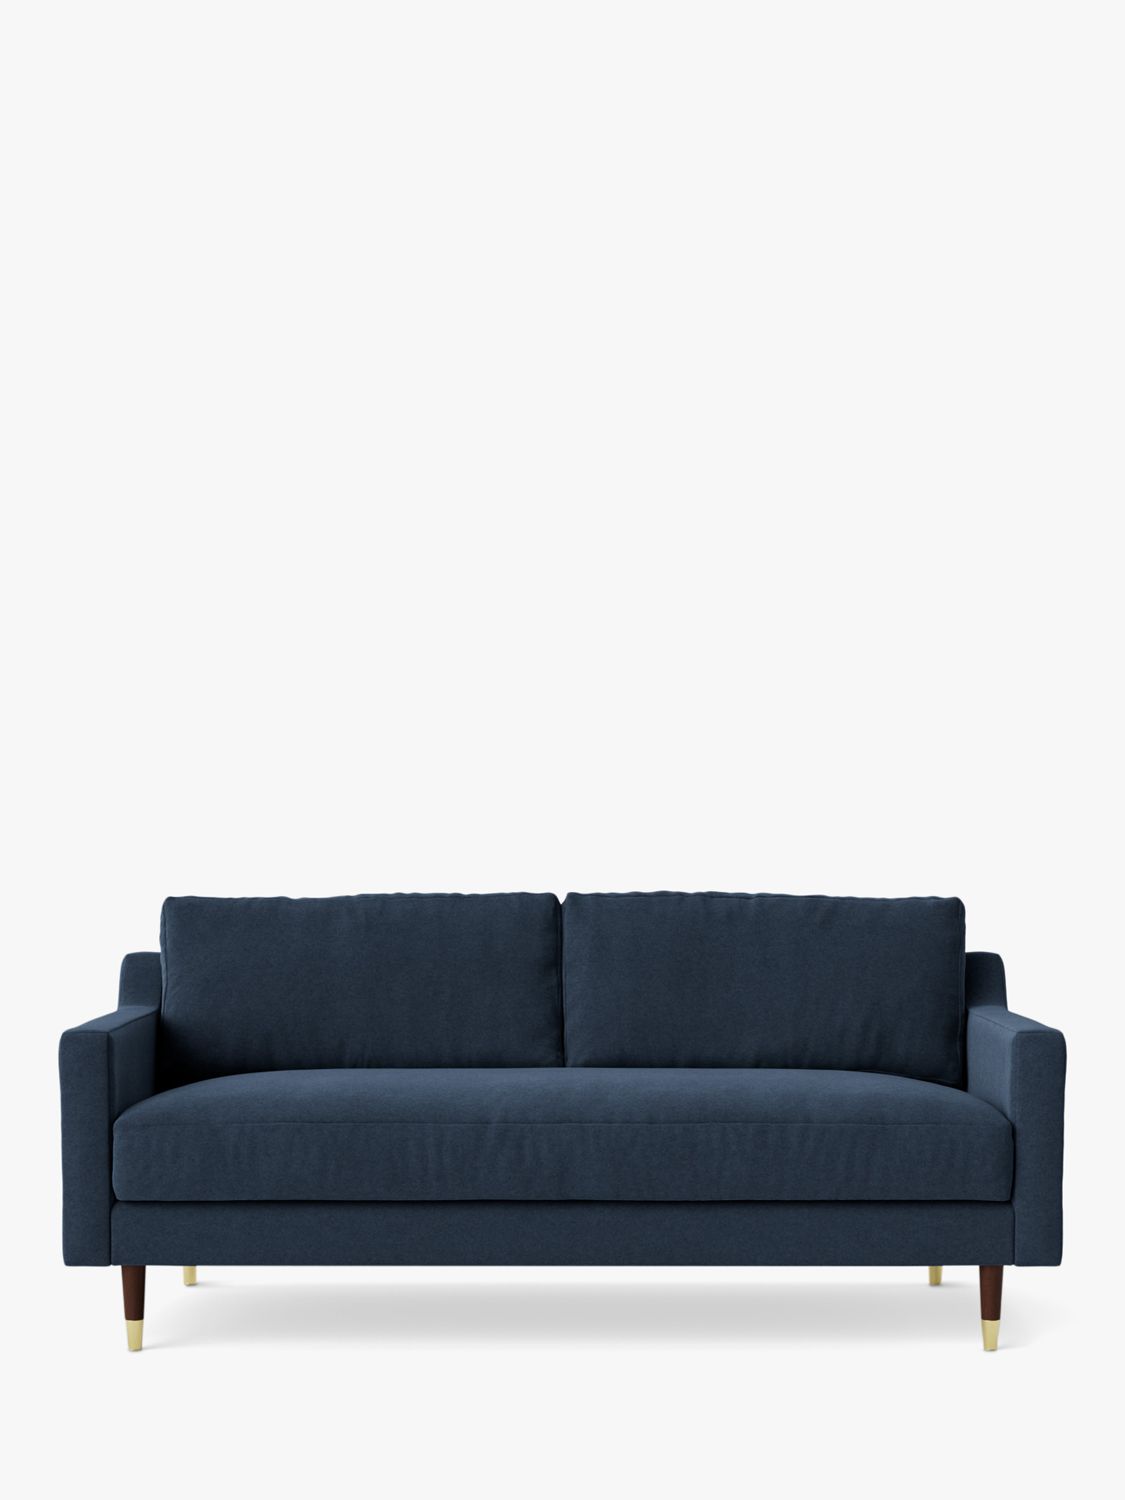 Rieti Range, Swoon Rieti Medium 2 Seater Sofa, Smart Wool Indigo